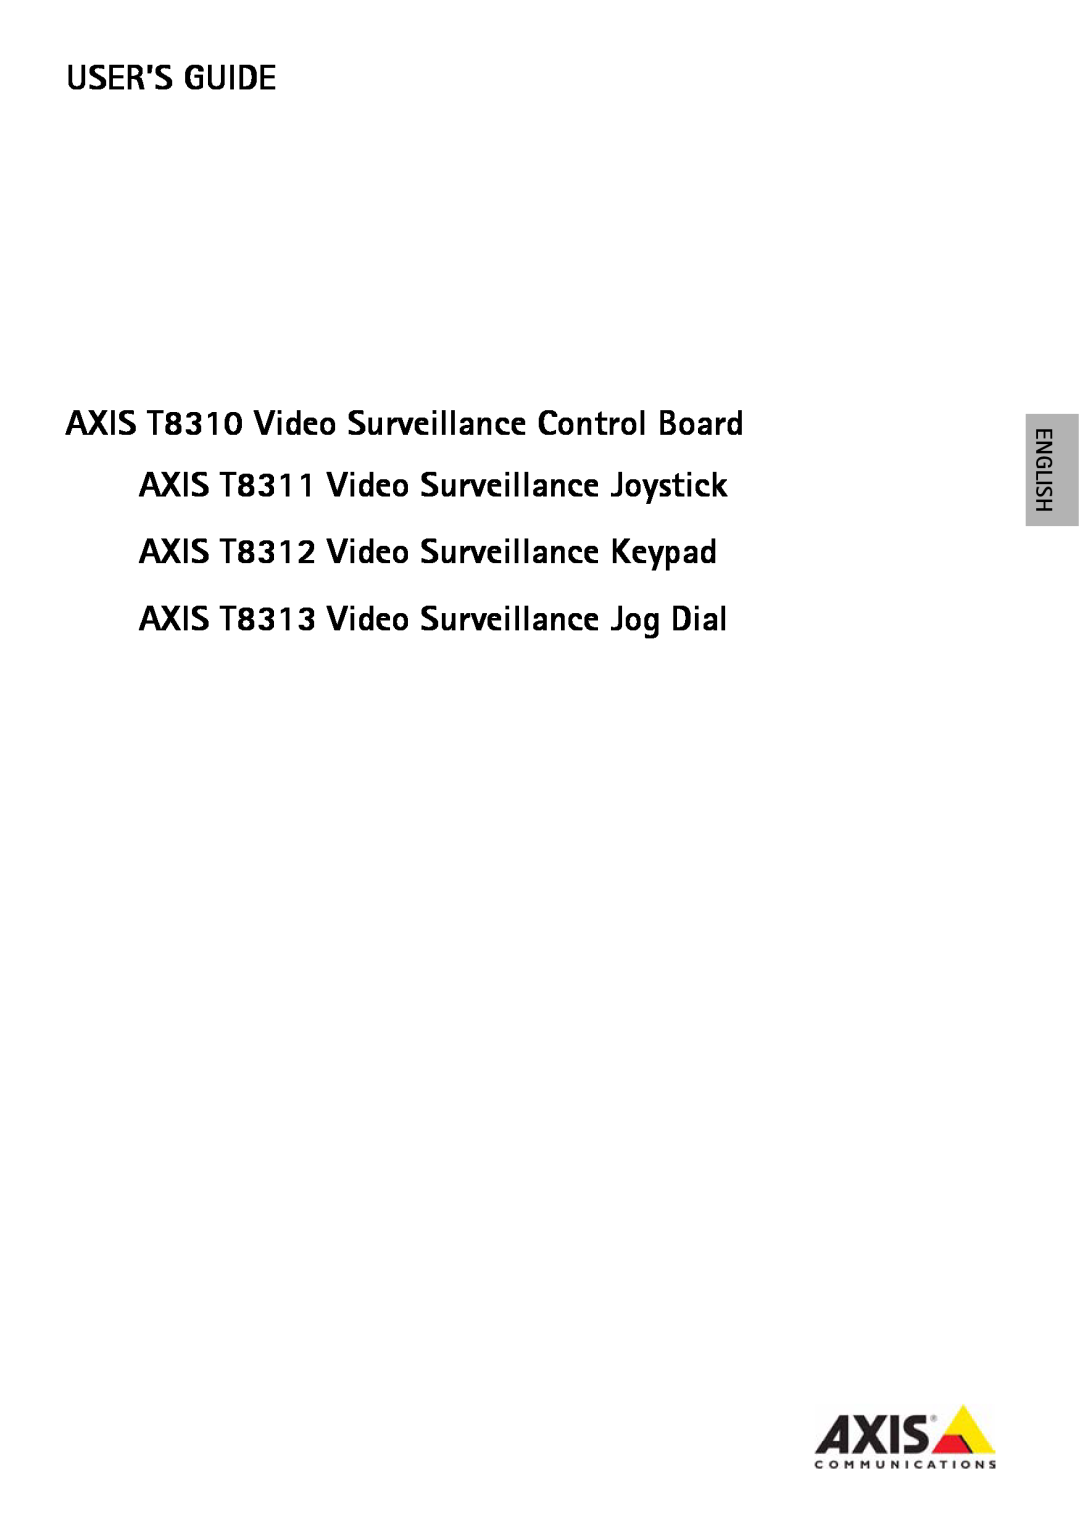 Axis Communications AXIS T8311, AXIS T8310, AXIS T8312, AXIS T8313 manual User’S Guide, English 